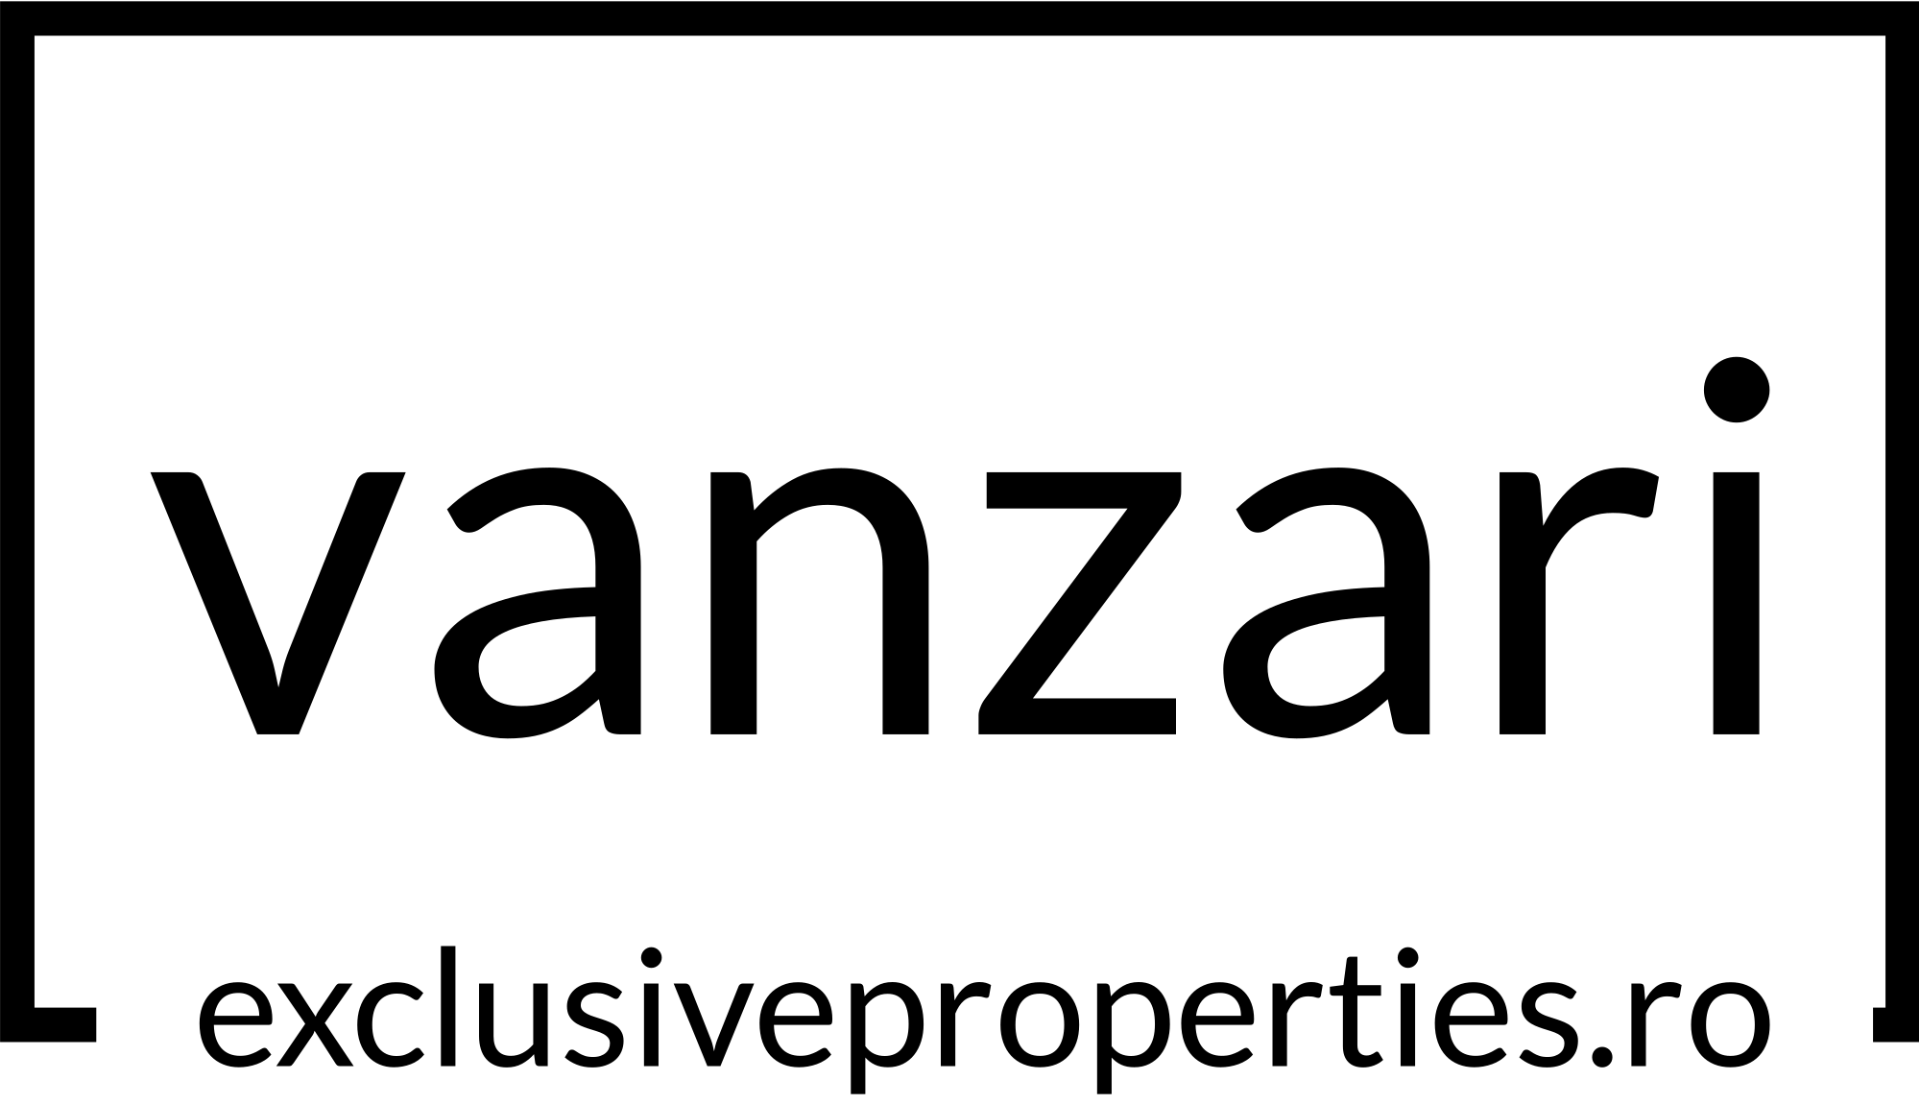 vanzari-high-resolution-logo-black-transparent